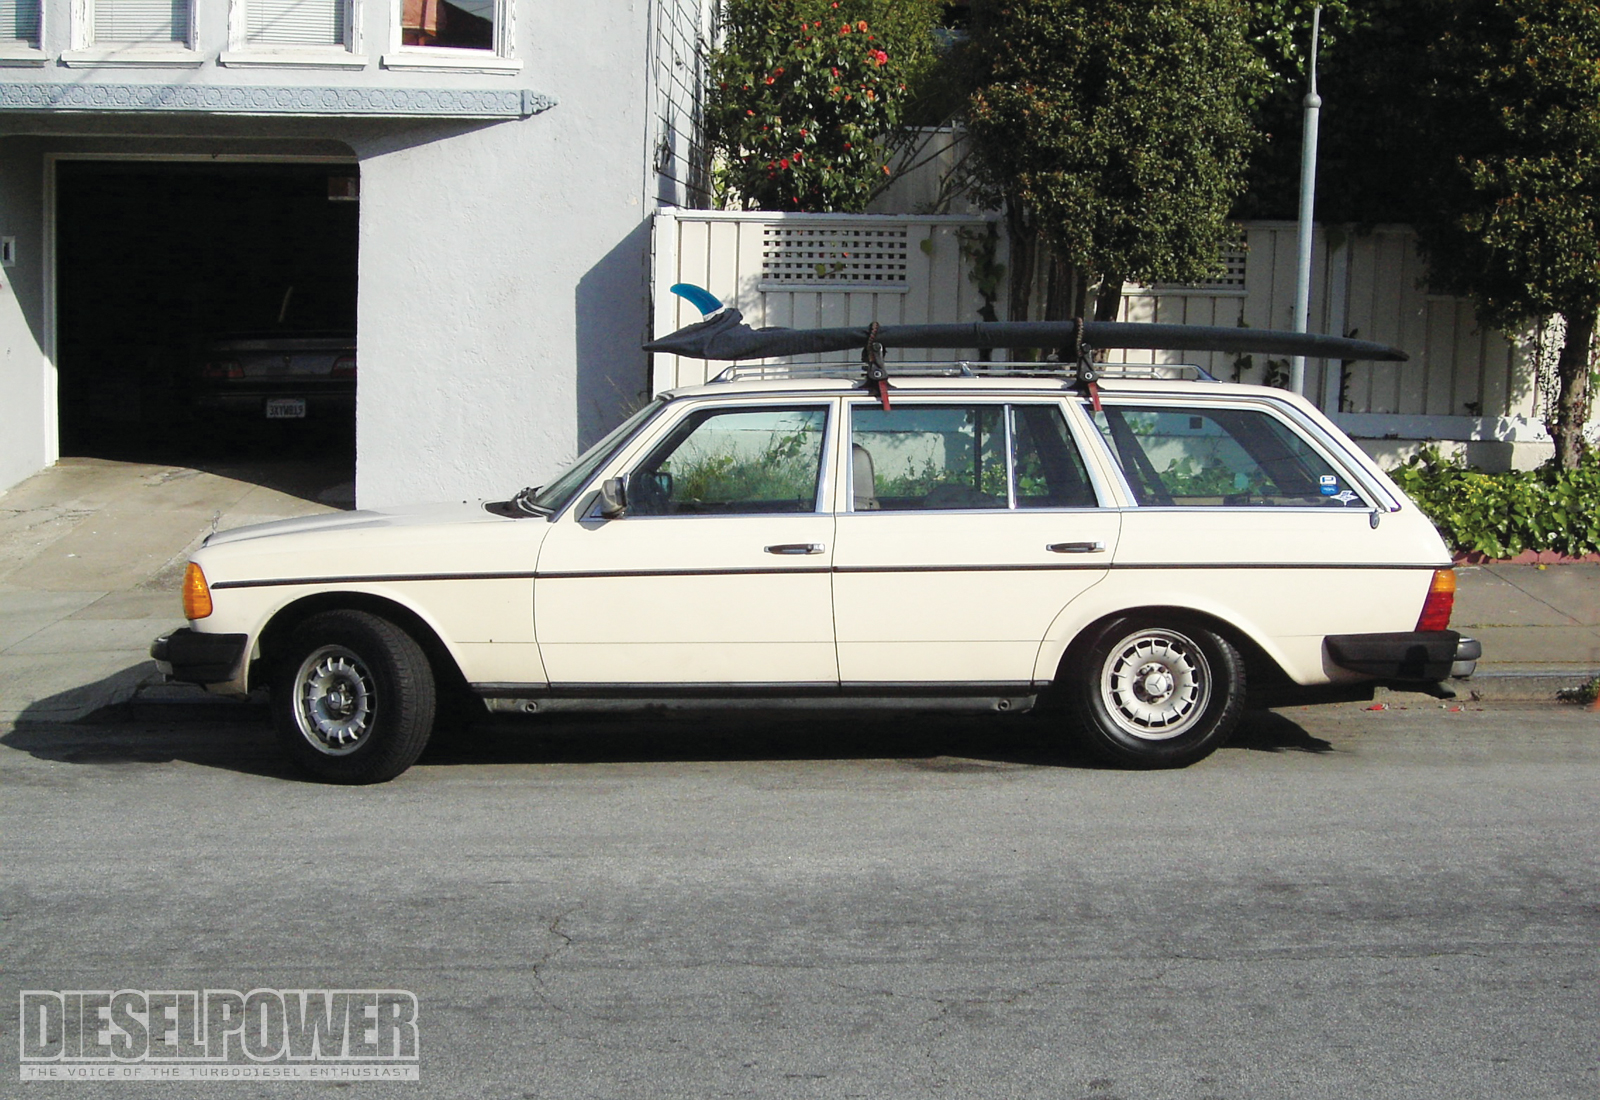 1985 Mercedes benz 300td wagon review #3